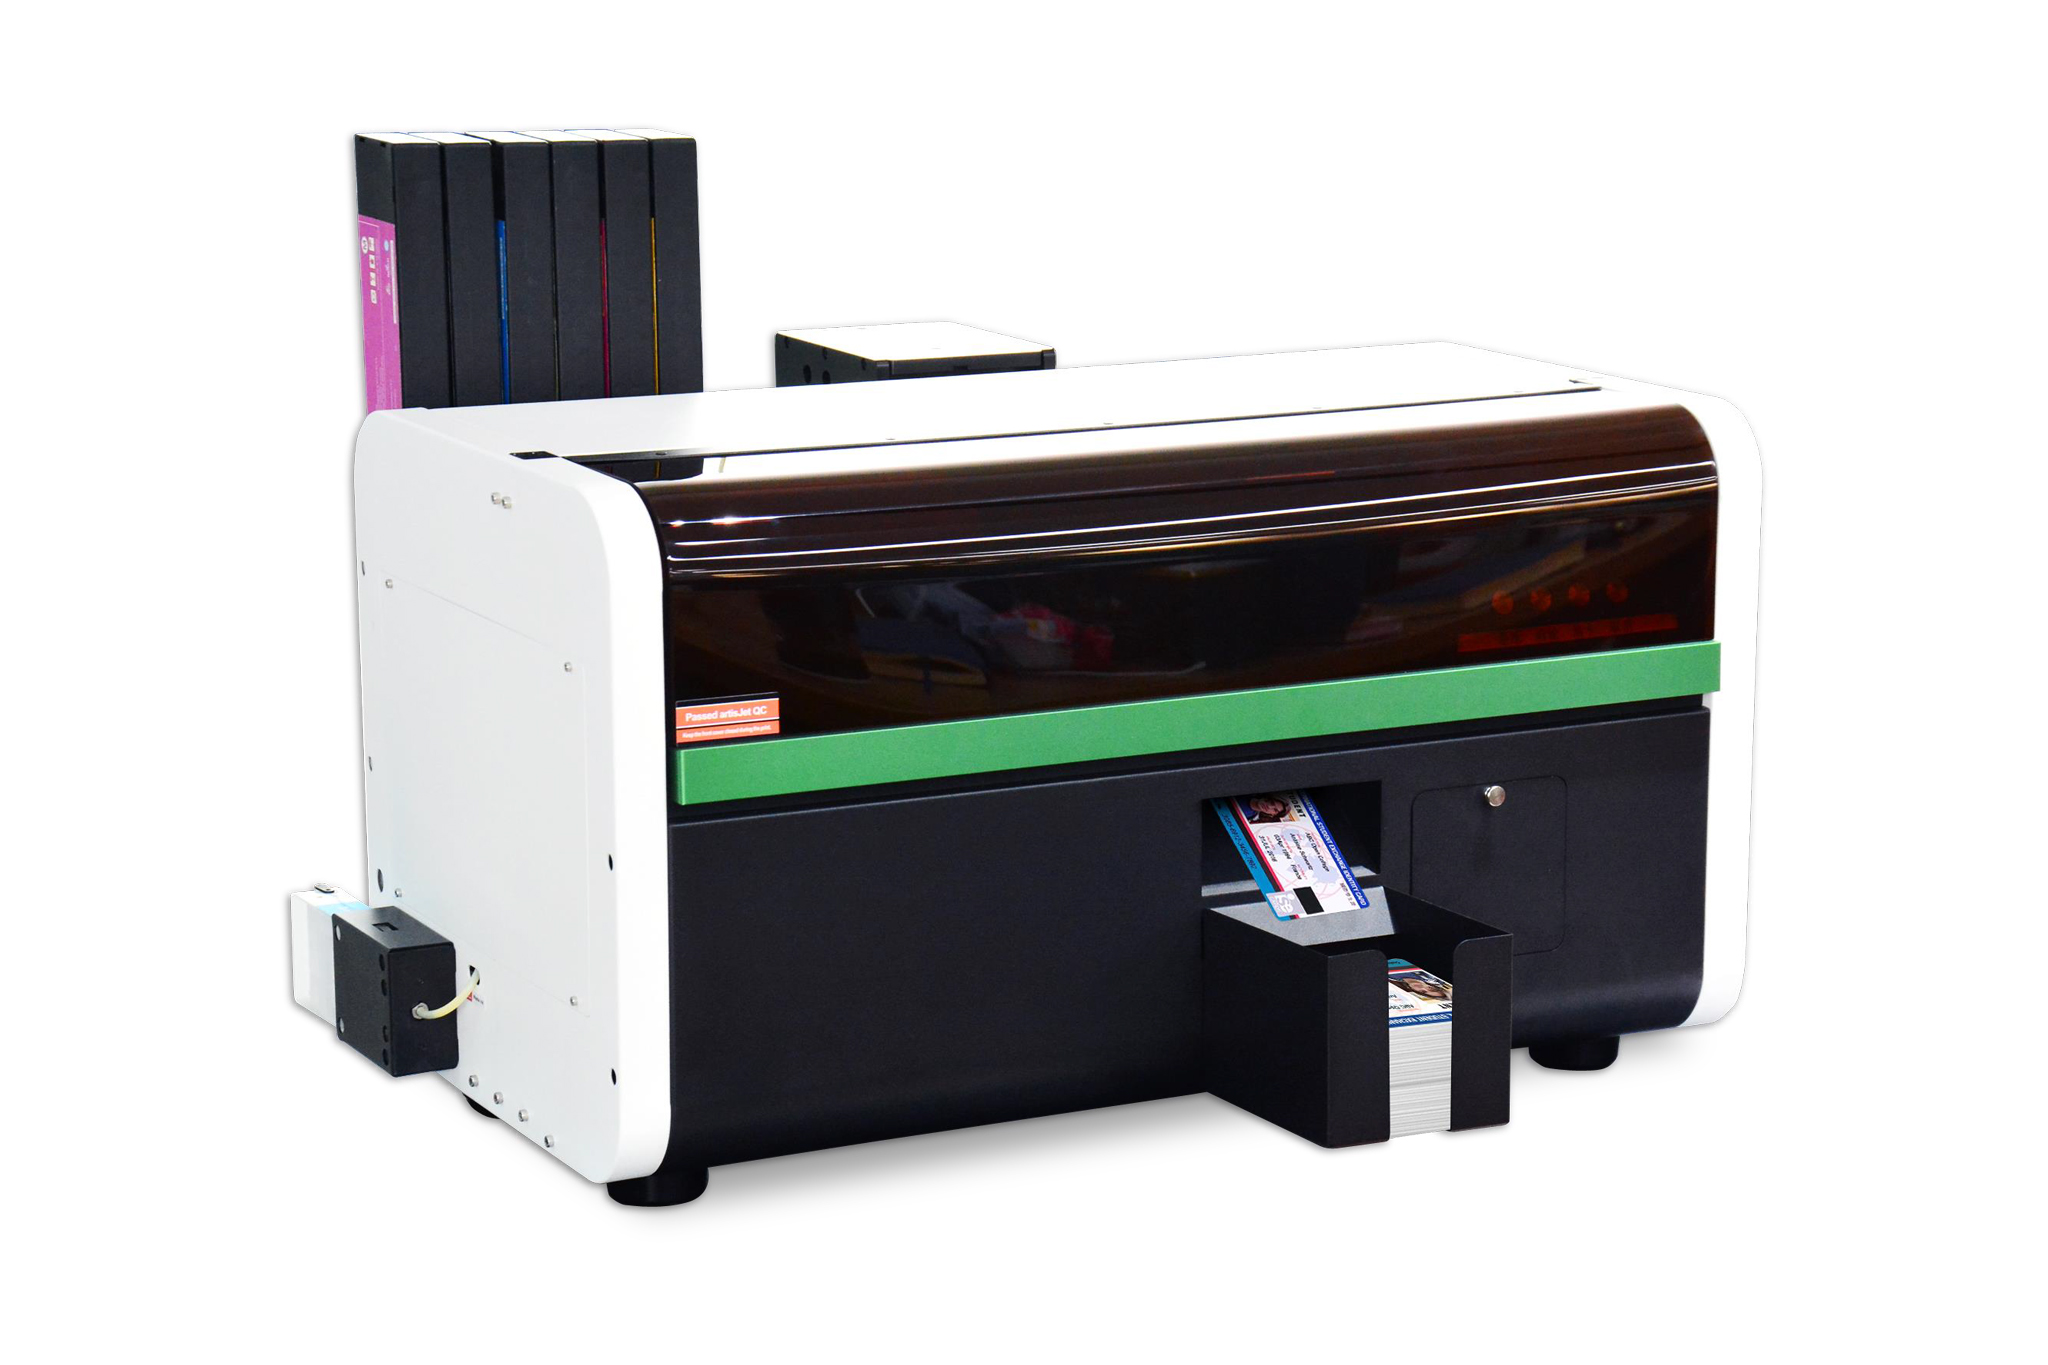 ArtisJet Proud Printer for ID cards from New Zealand supplier eCardz